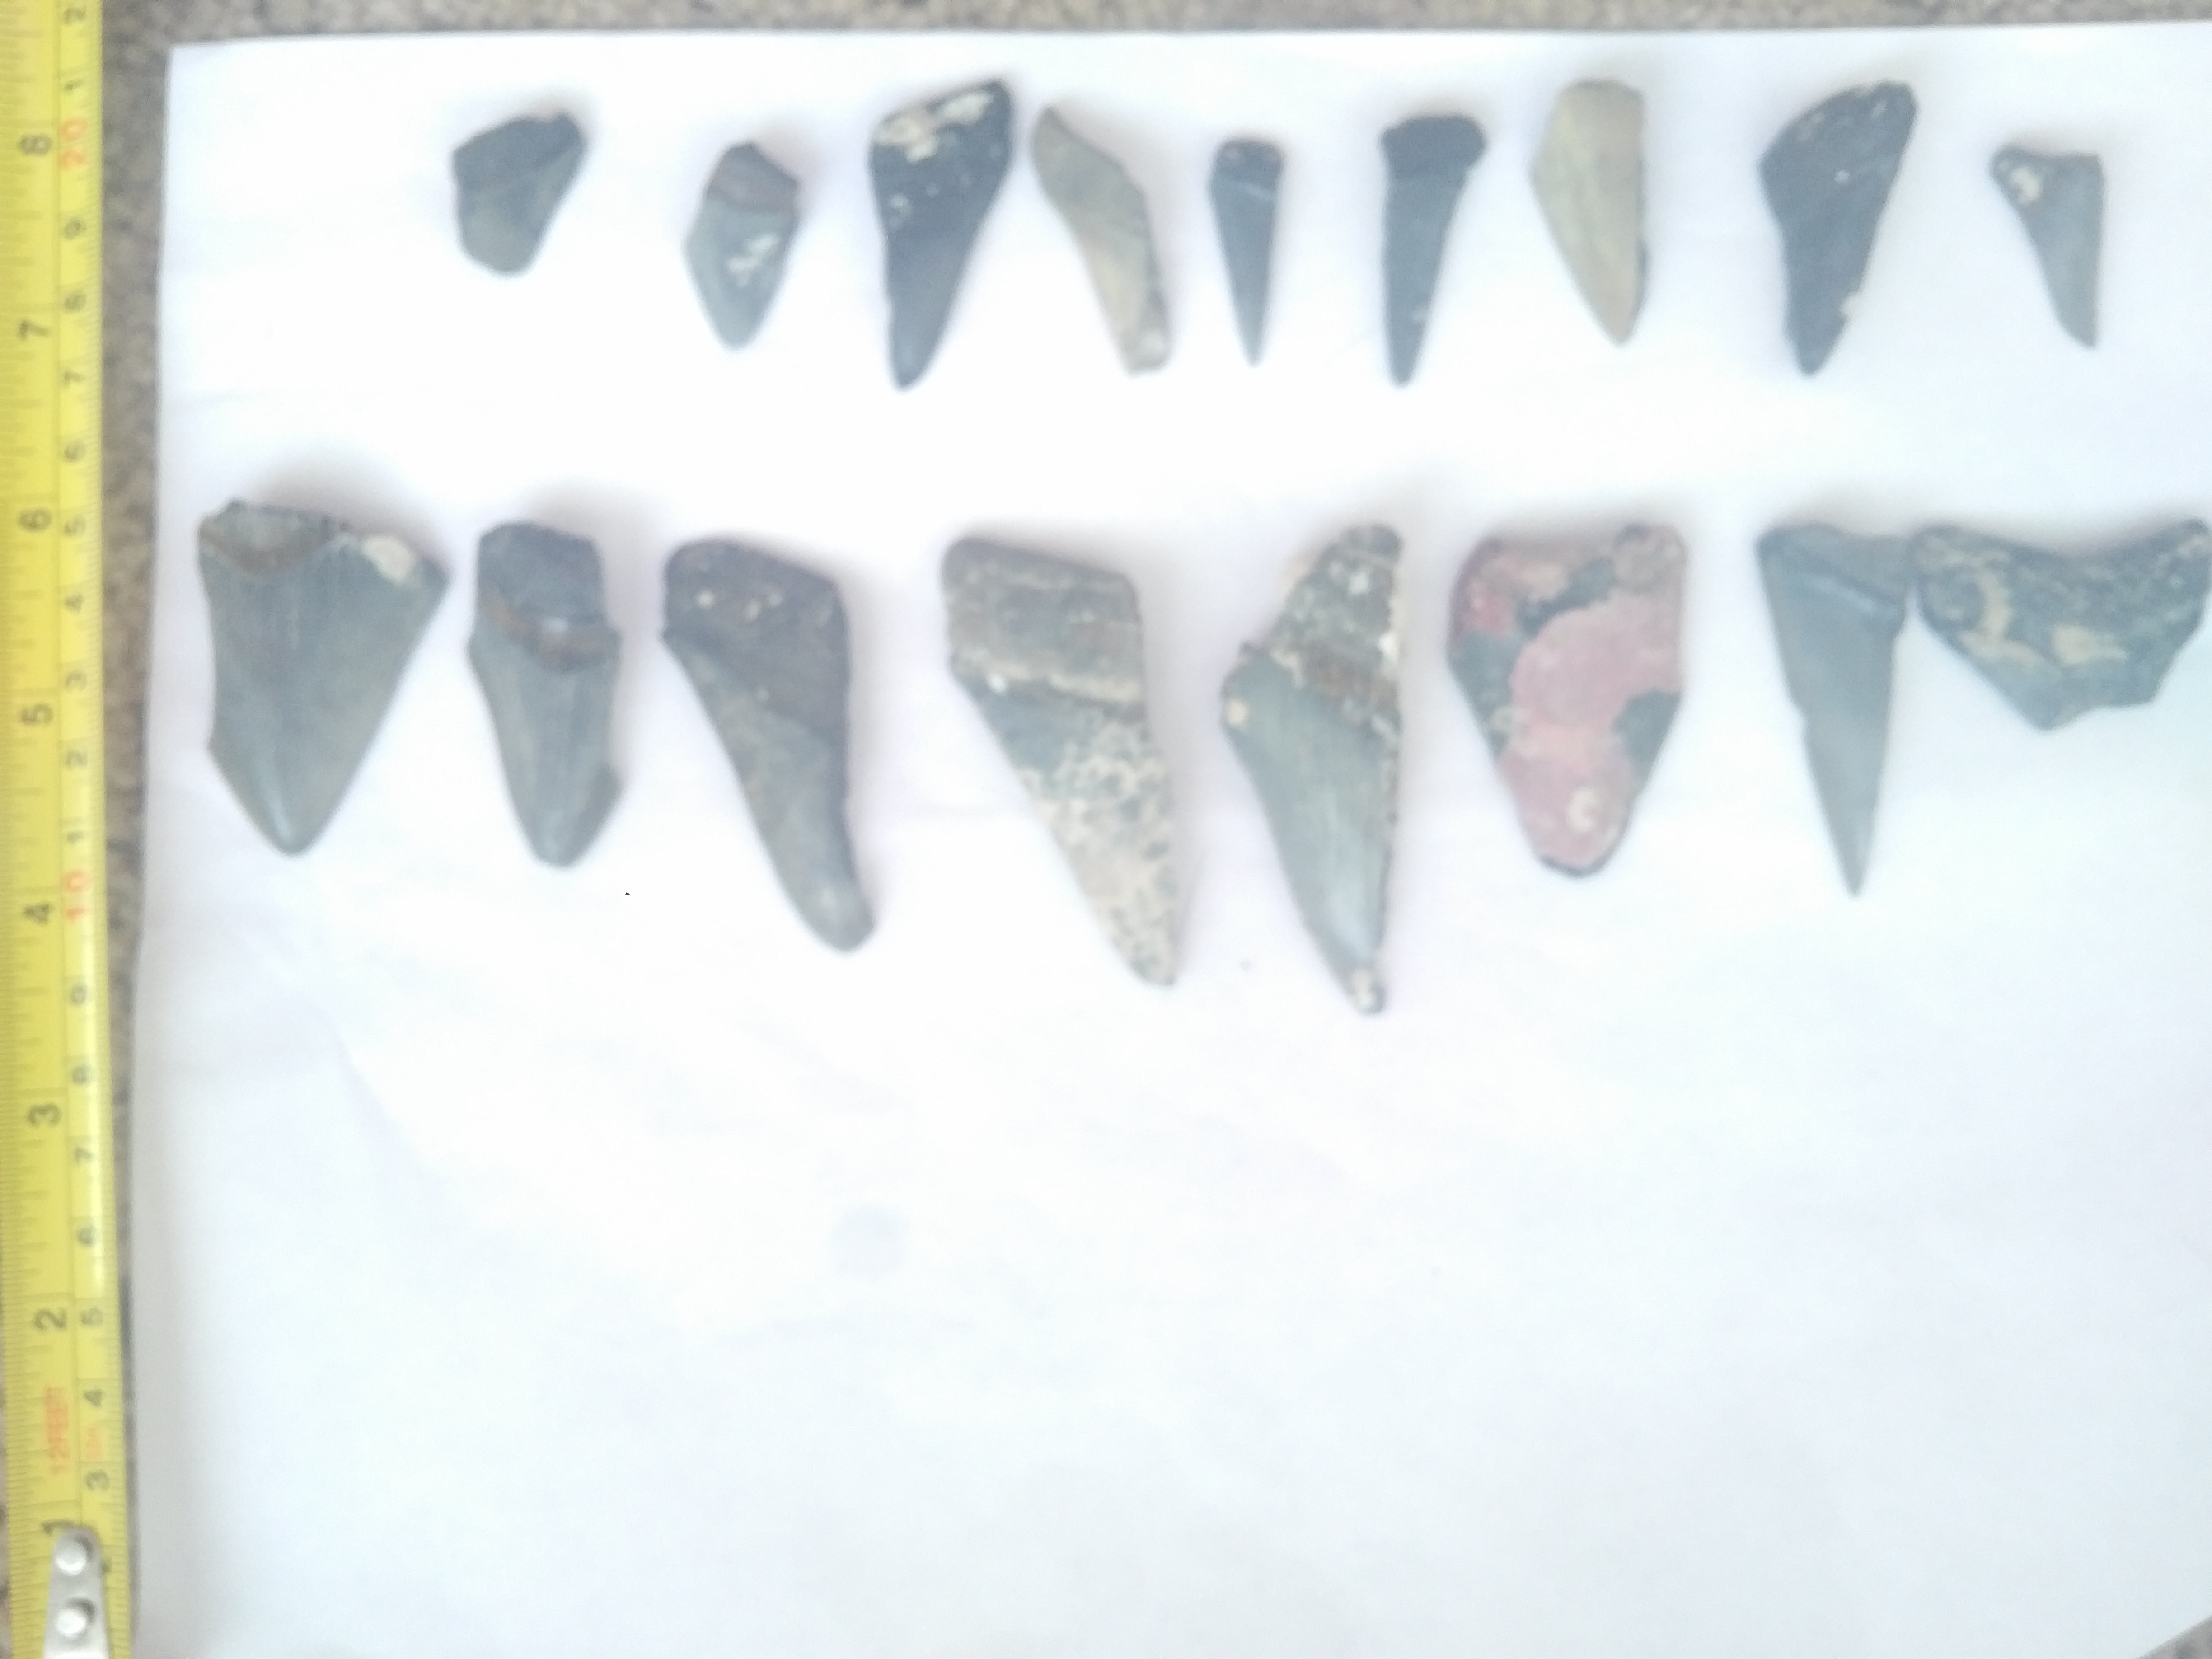 Large teeth fragments